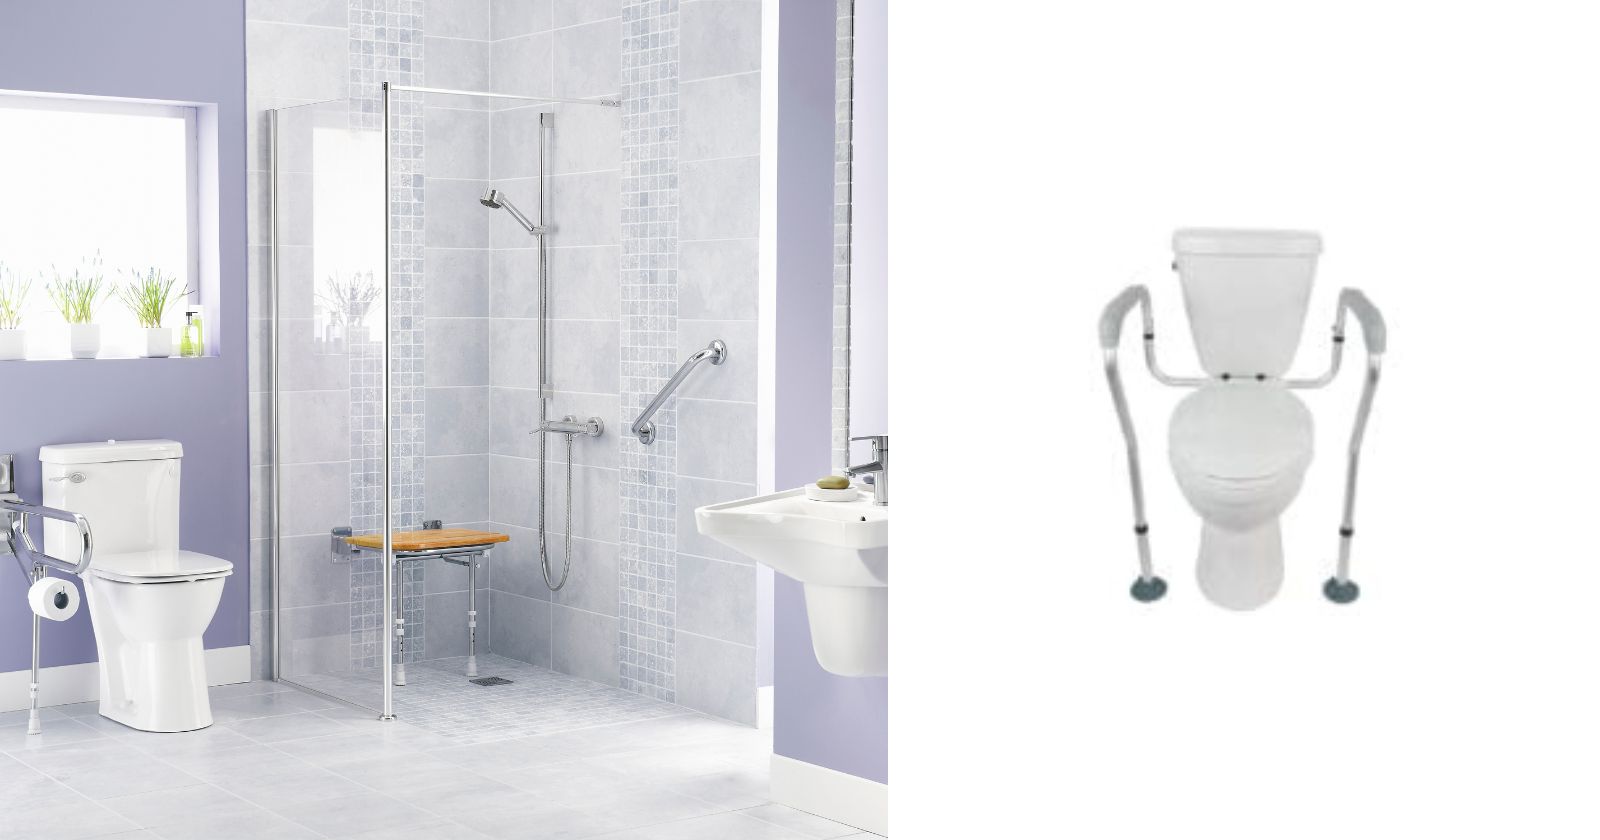 Vive Toilet Rail-Bathroom Safety Frame Review